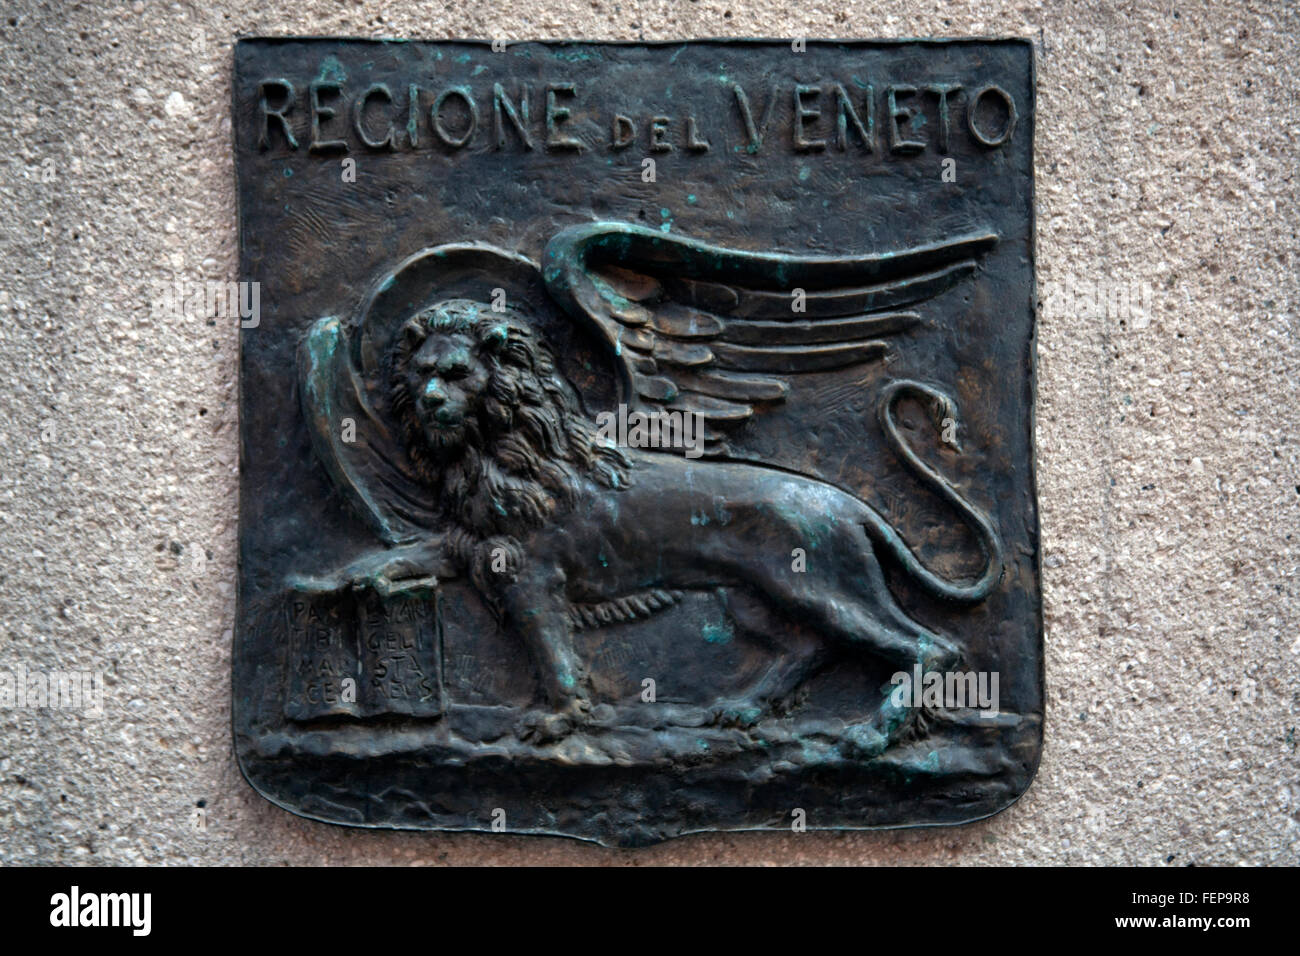 Venetian lion plaque the Lion of Venice - the symbol of Venice, Italy Stock Photo